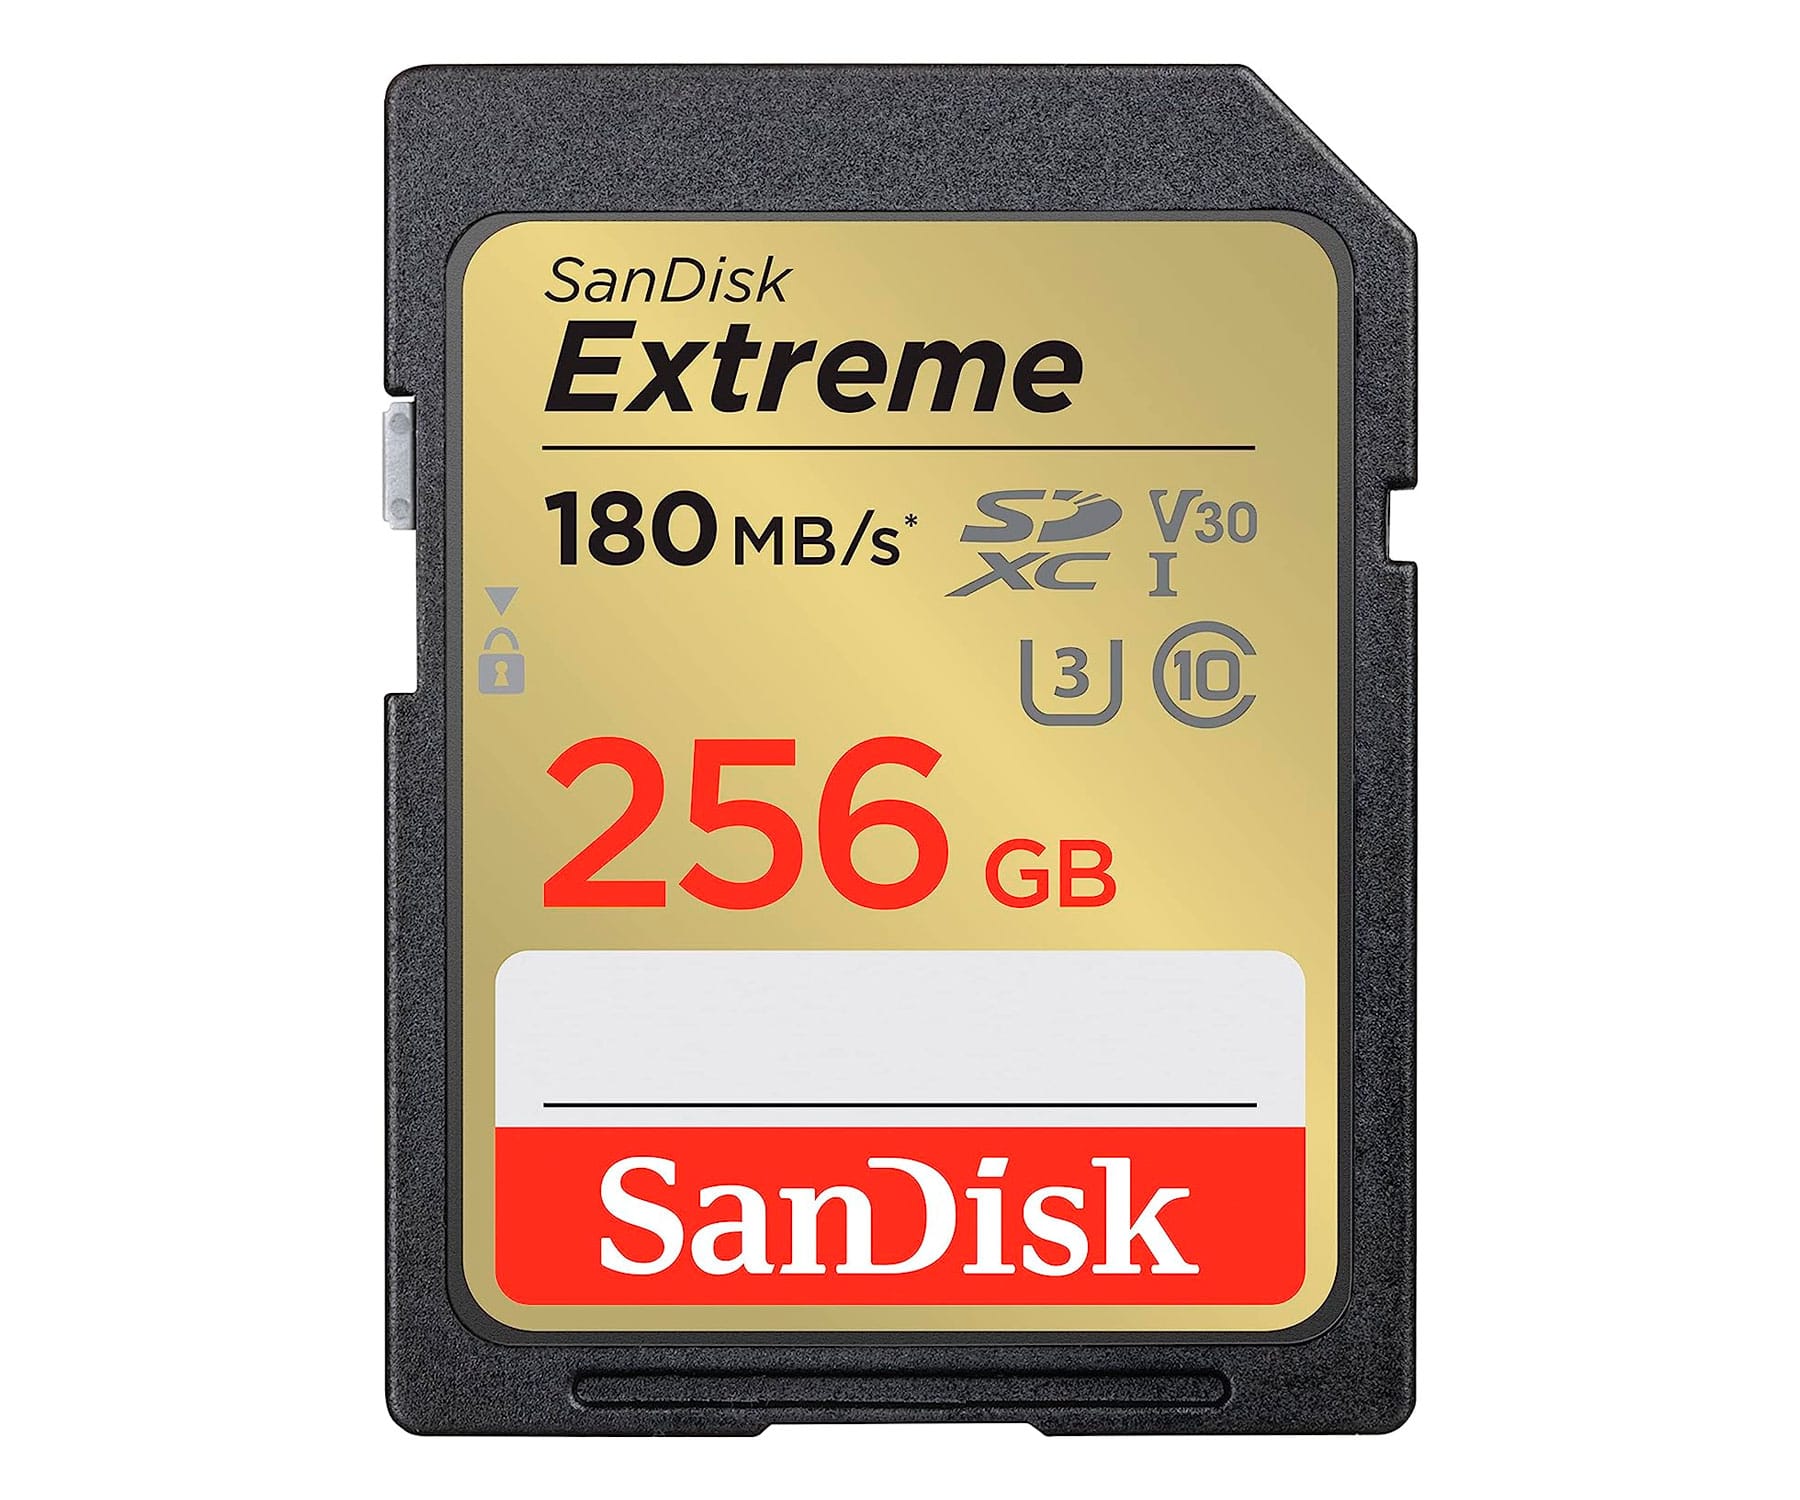 SanDisk Extreme / Memoria SDXV C10 UHS-I U3 256GB